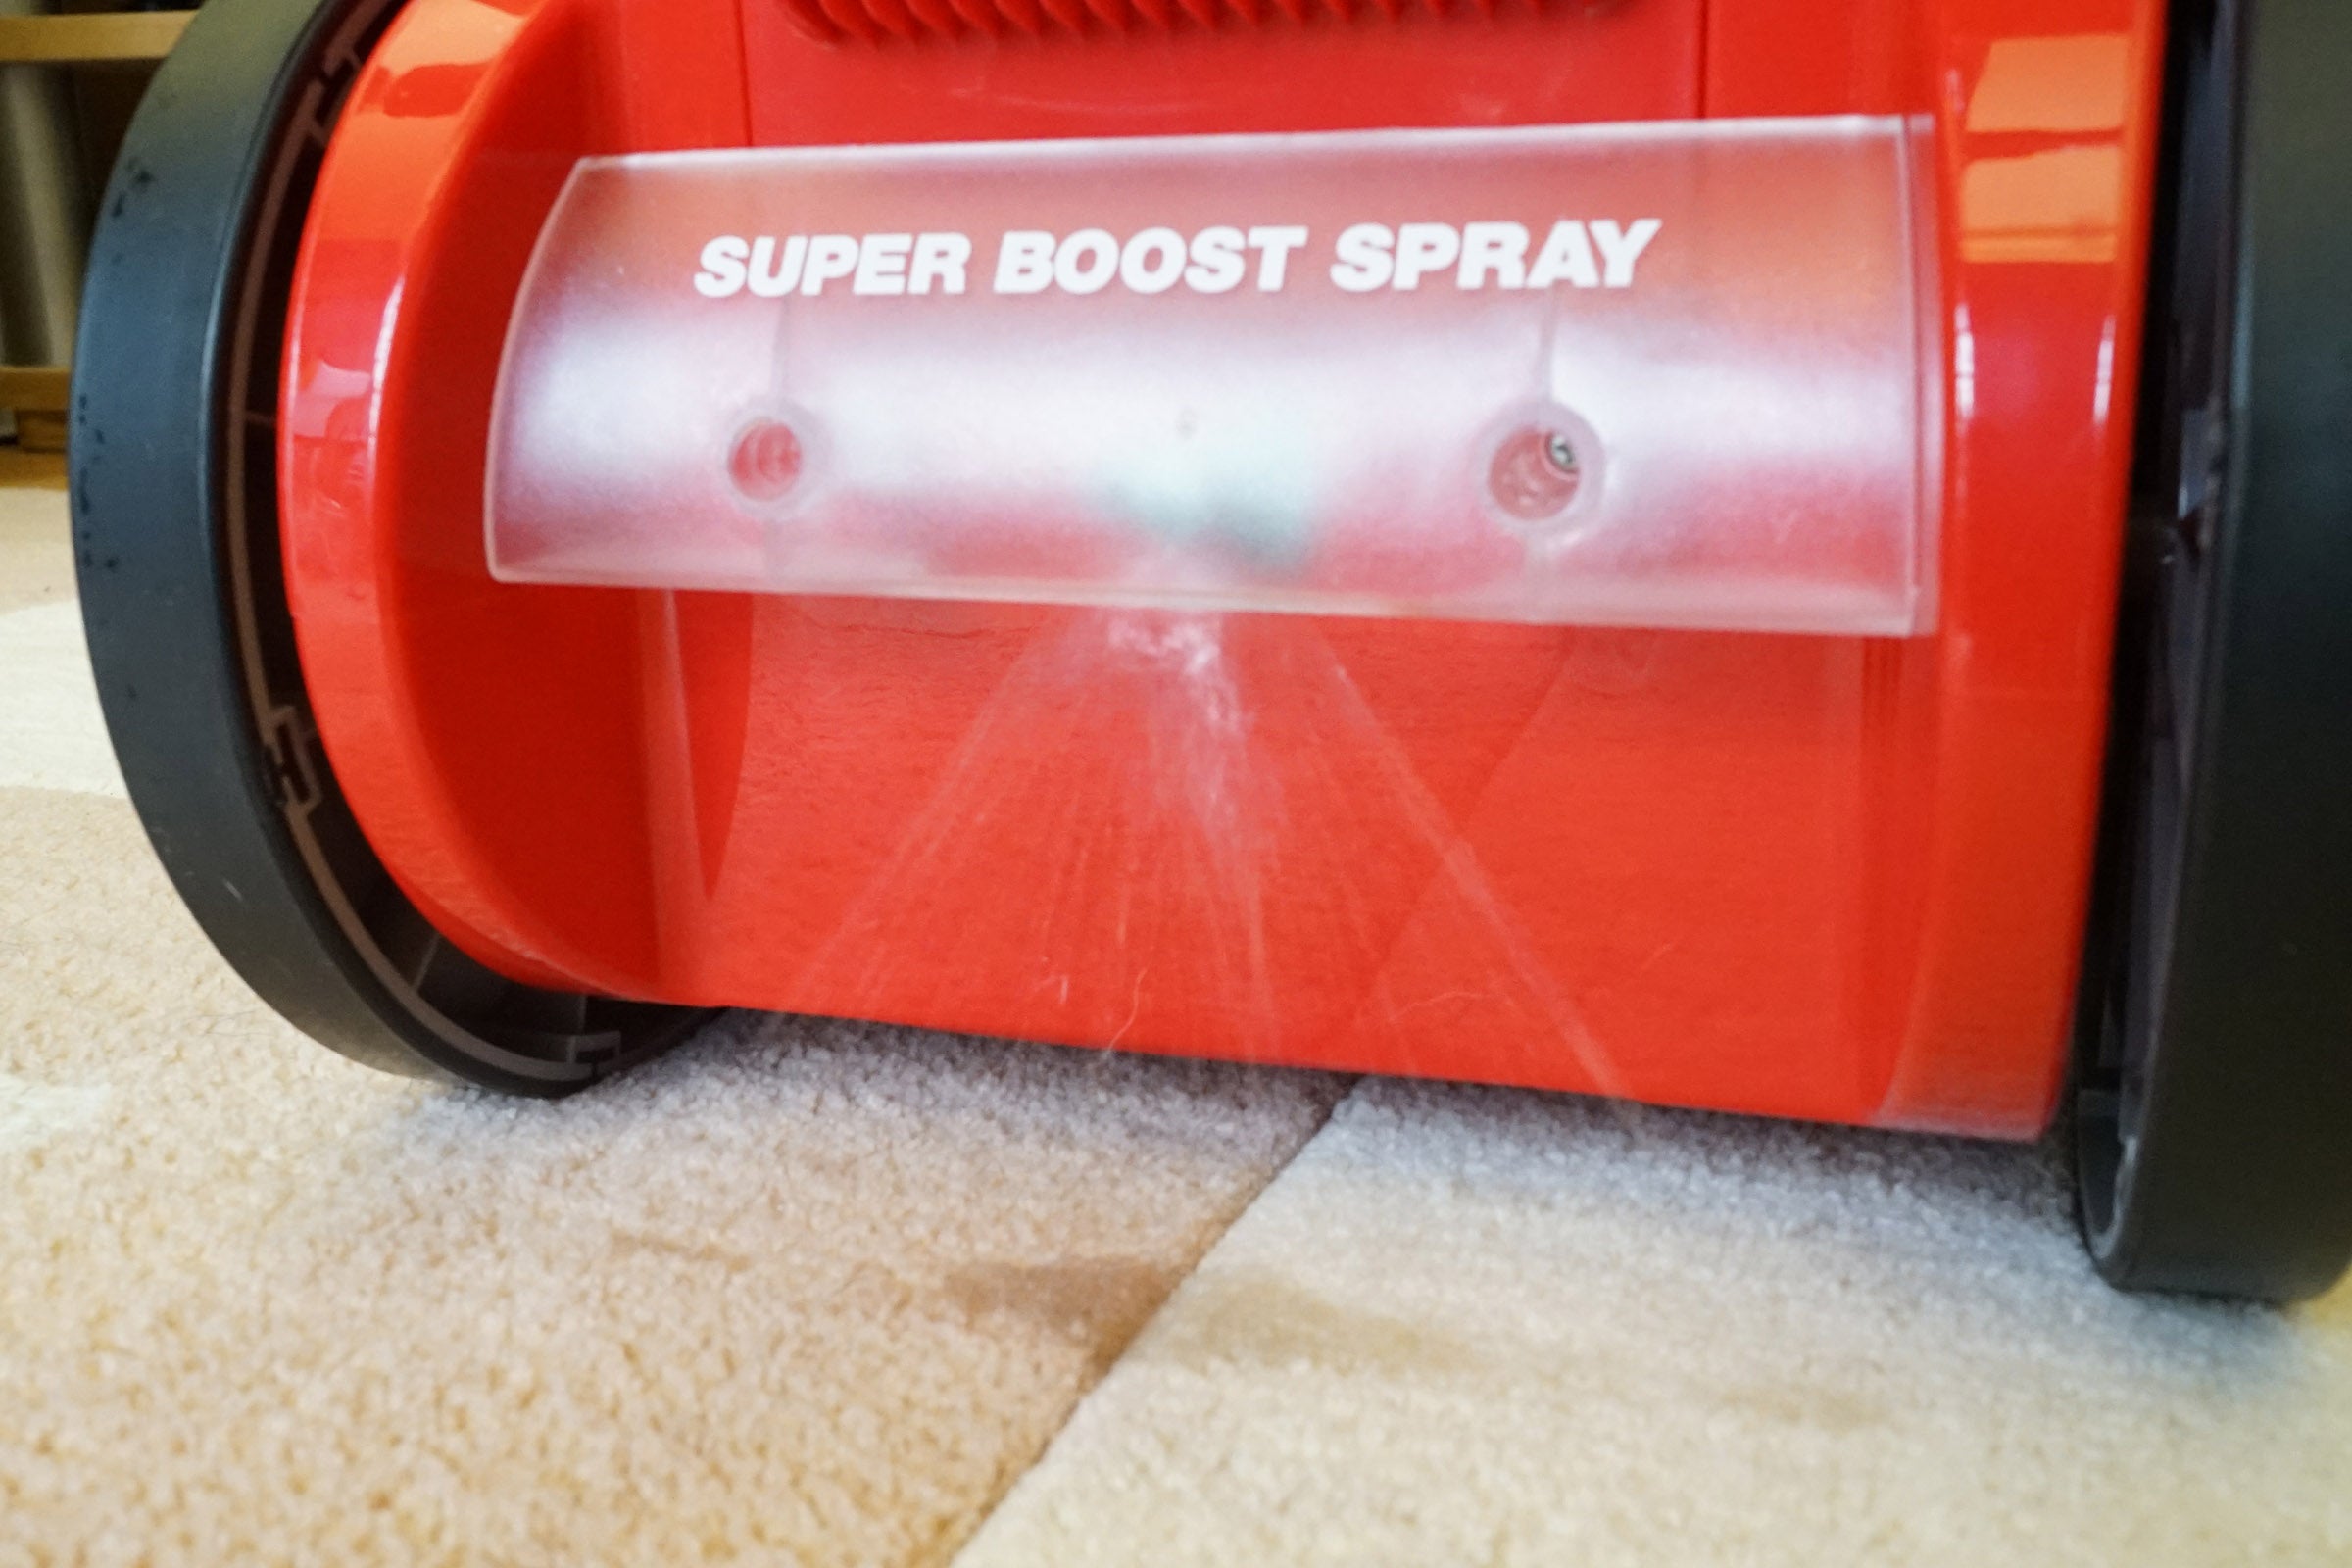 Rug Doctor carpet cleaner using super boost spray on carpet.